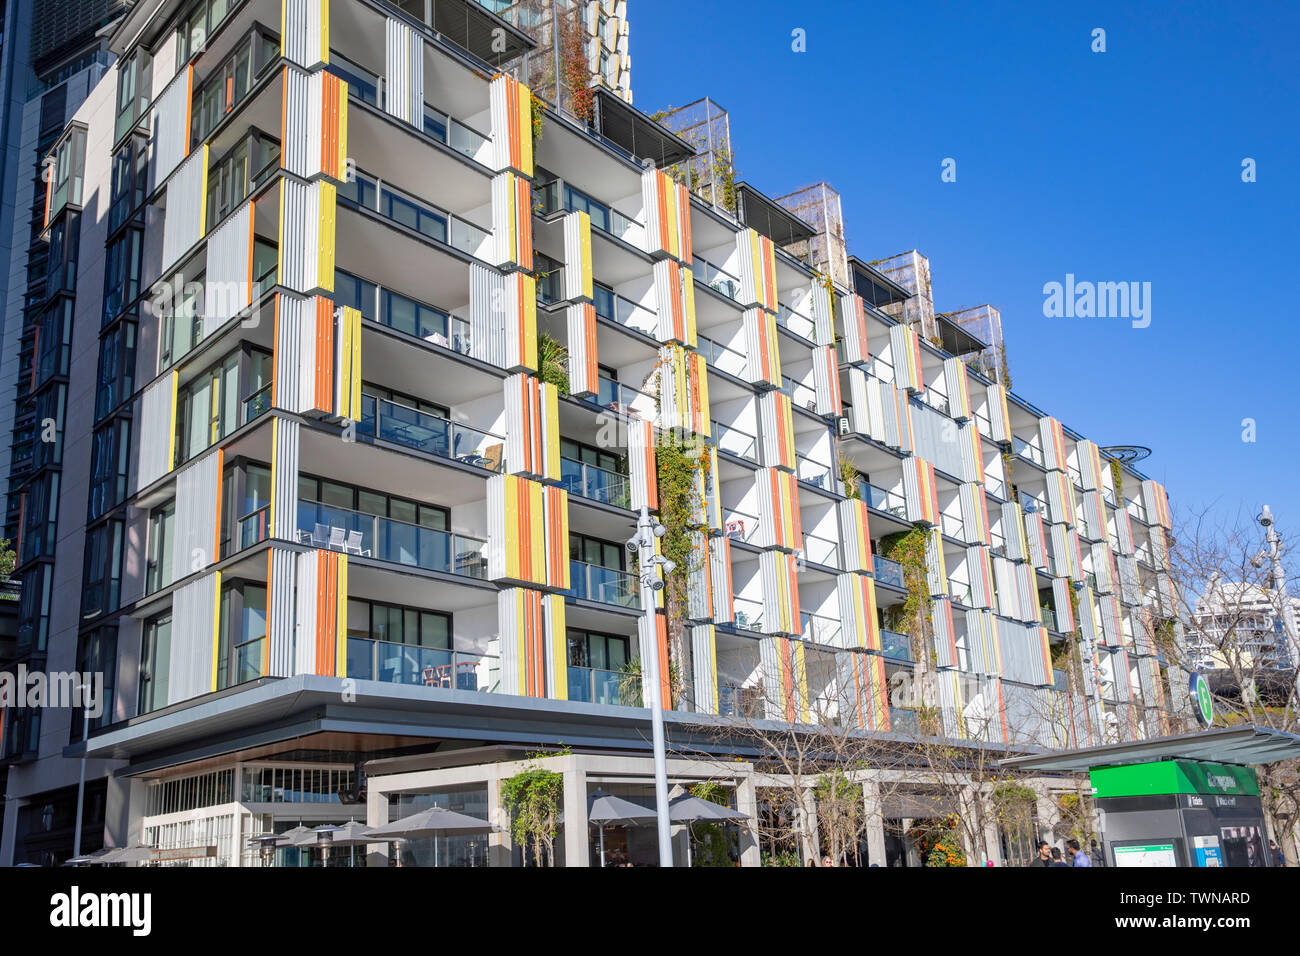 Residential apartments at Barangaroo urban development in Sydney city centre,New South Wales,Australia Stock Photo